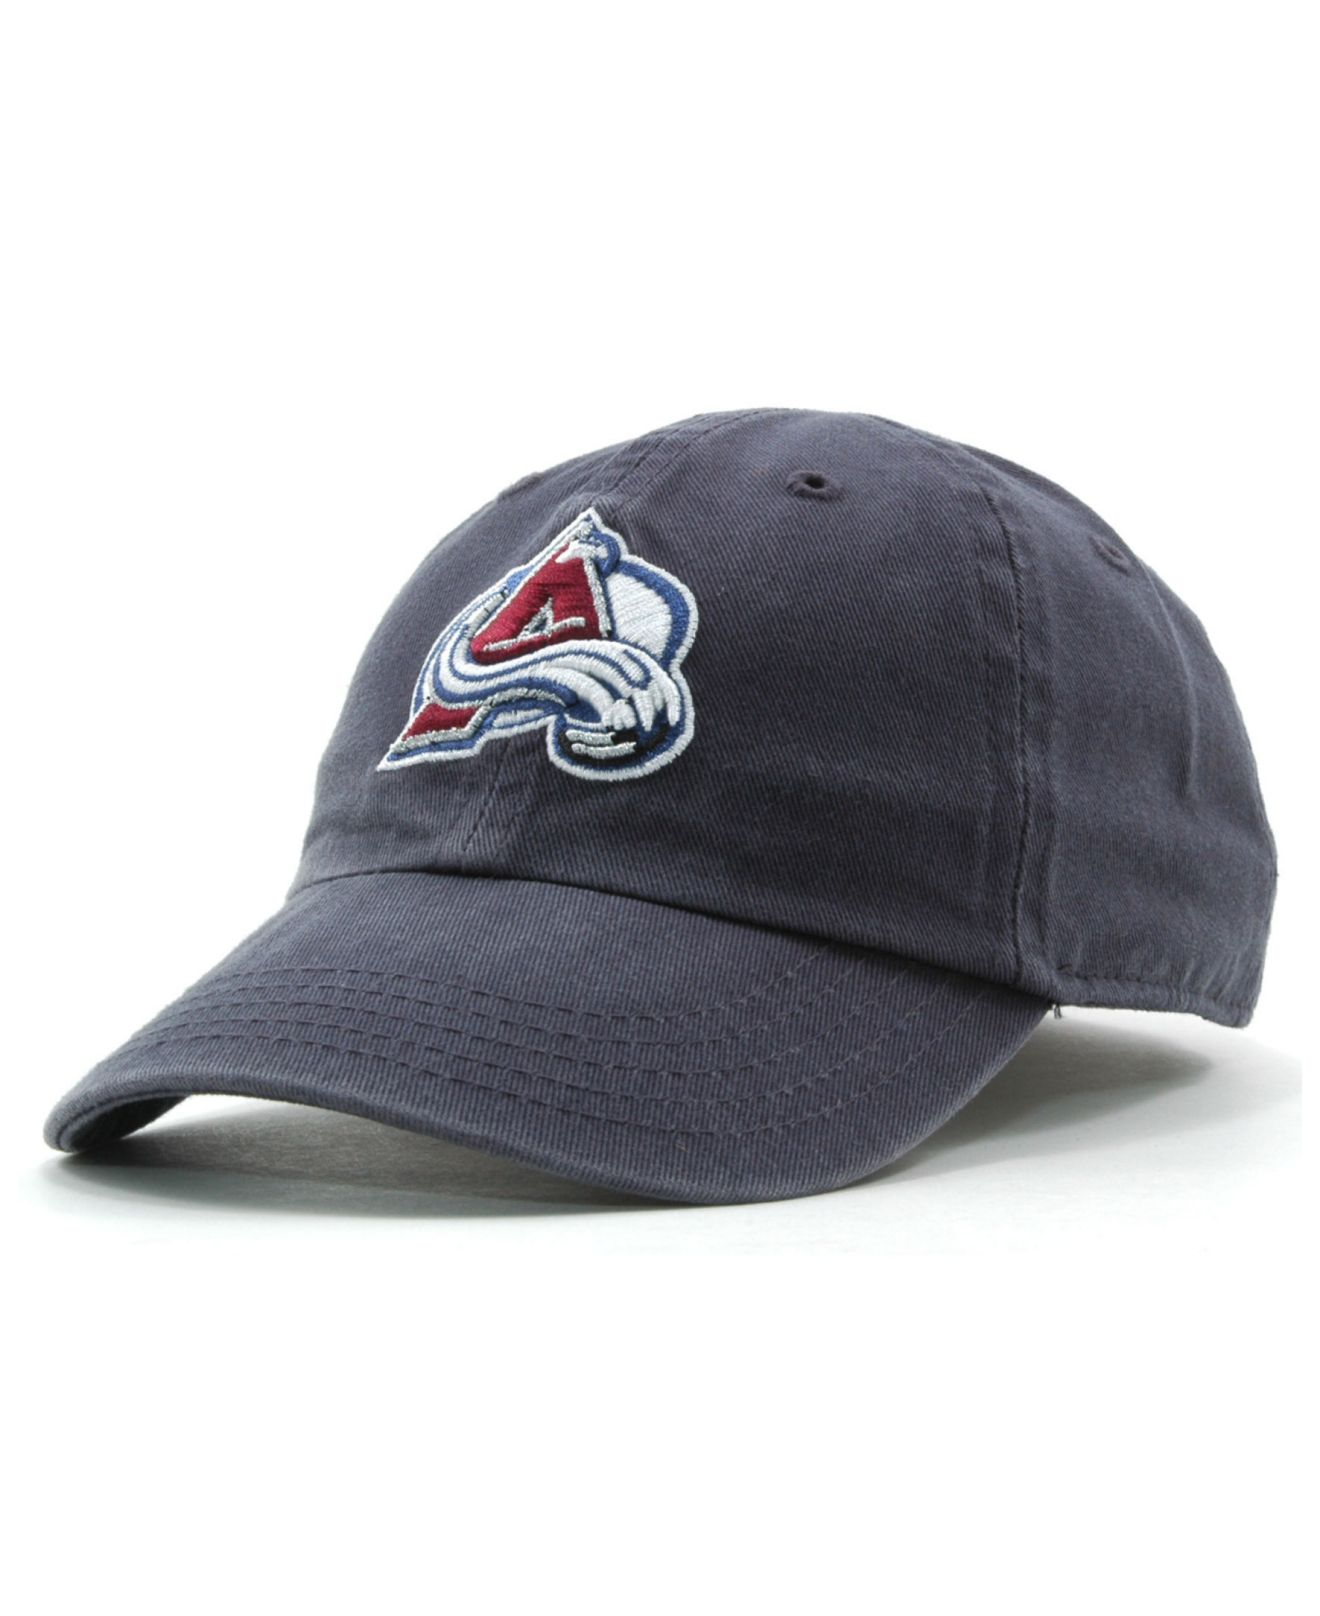 C'mon, everyone needs a new hat. - Colorado Avalanche